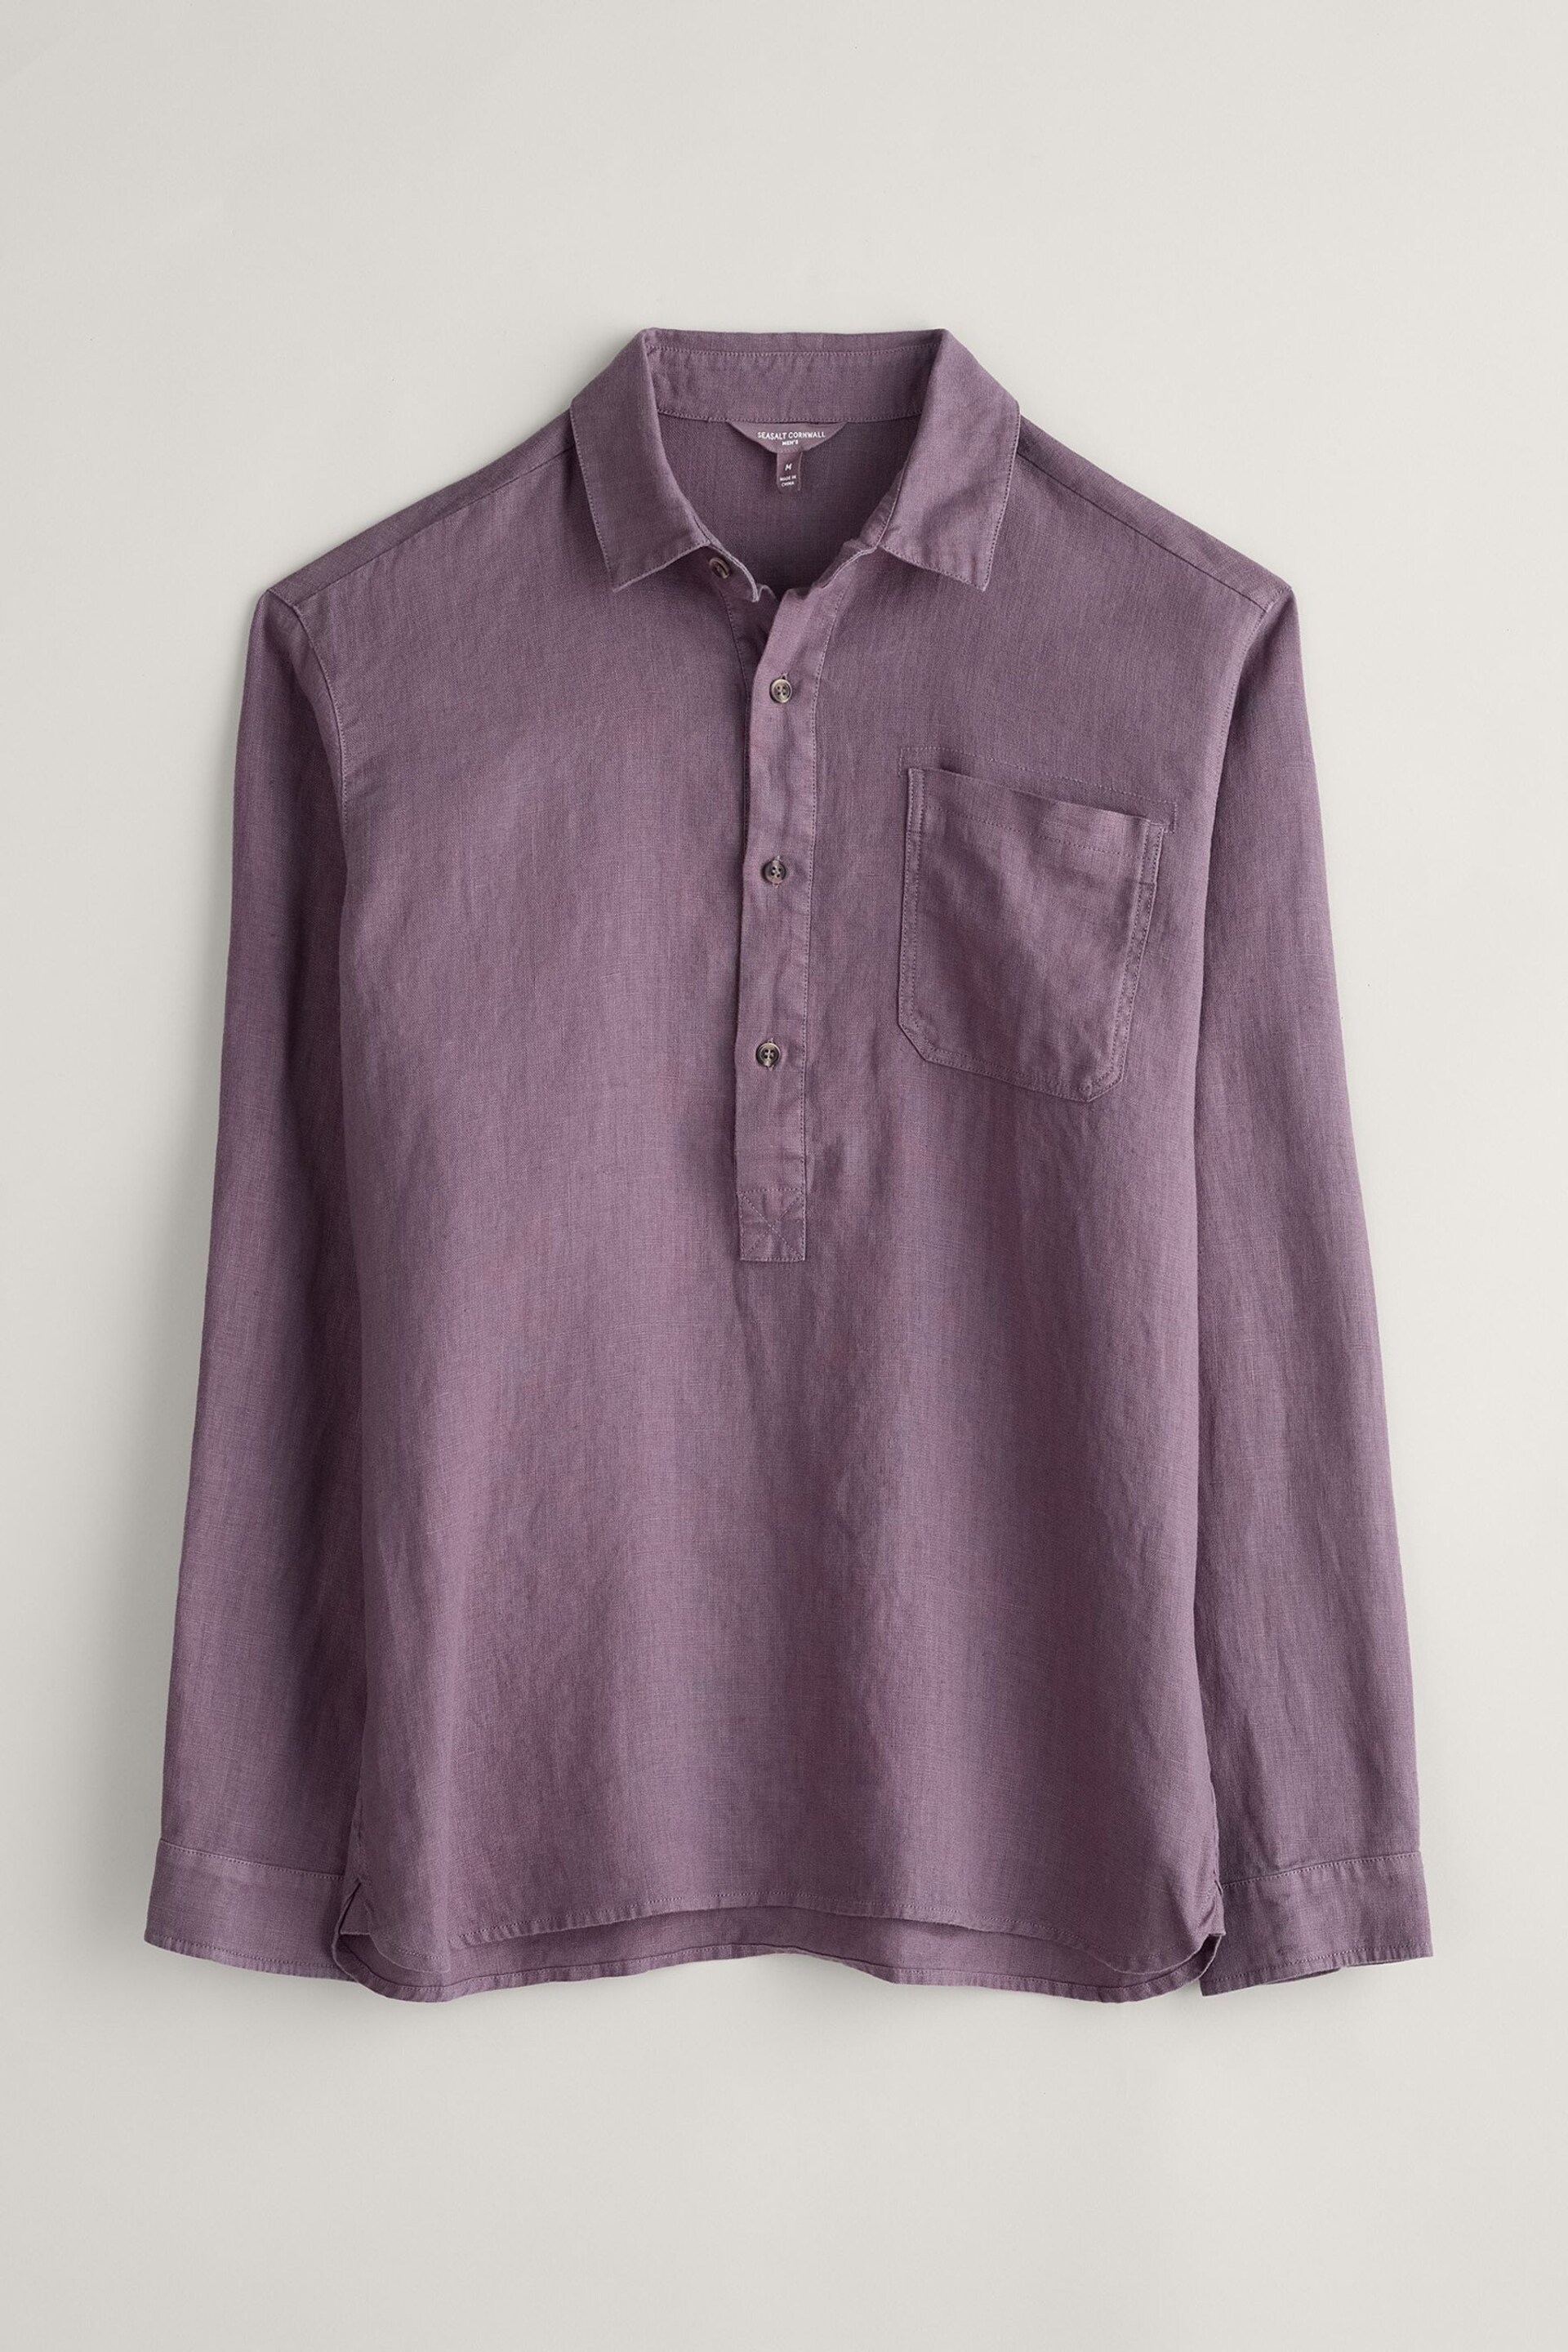 Seasalt Cornwall Purple Artist's Shirt - Image 4 of 5